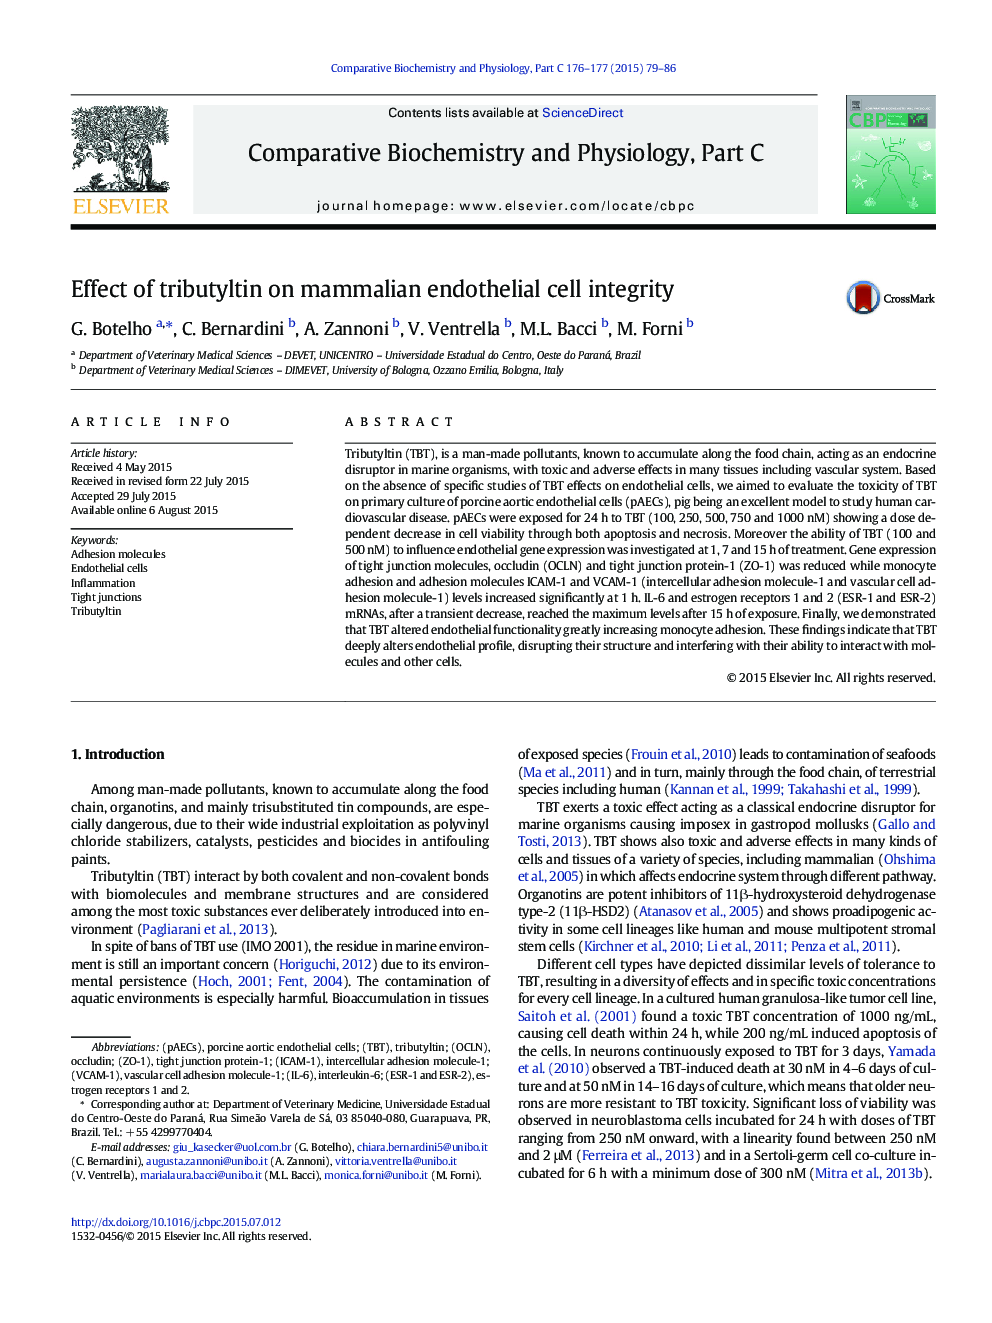 Effect of tributyltin on mammalian endothelial cell integrity